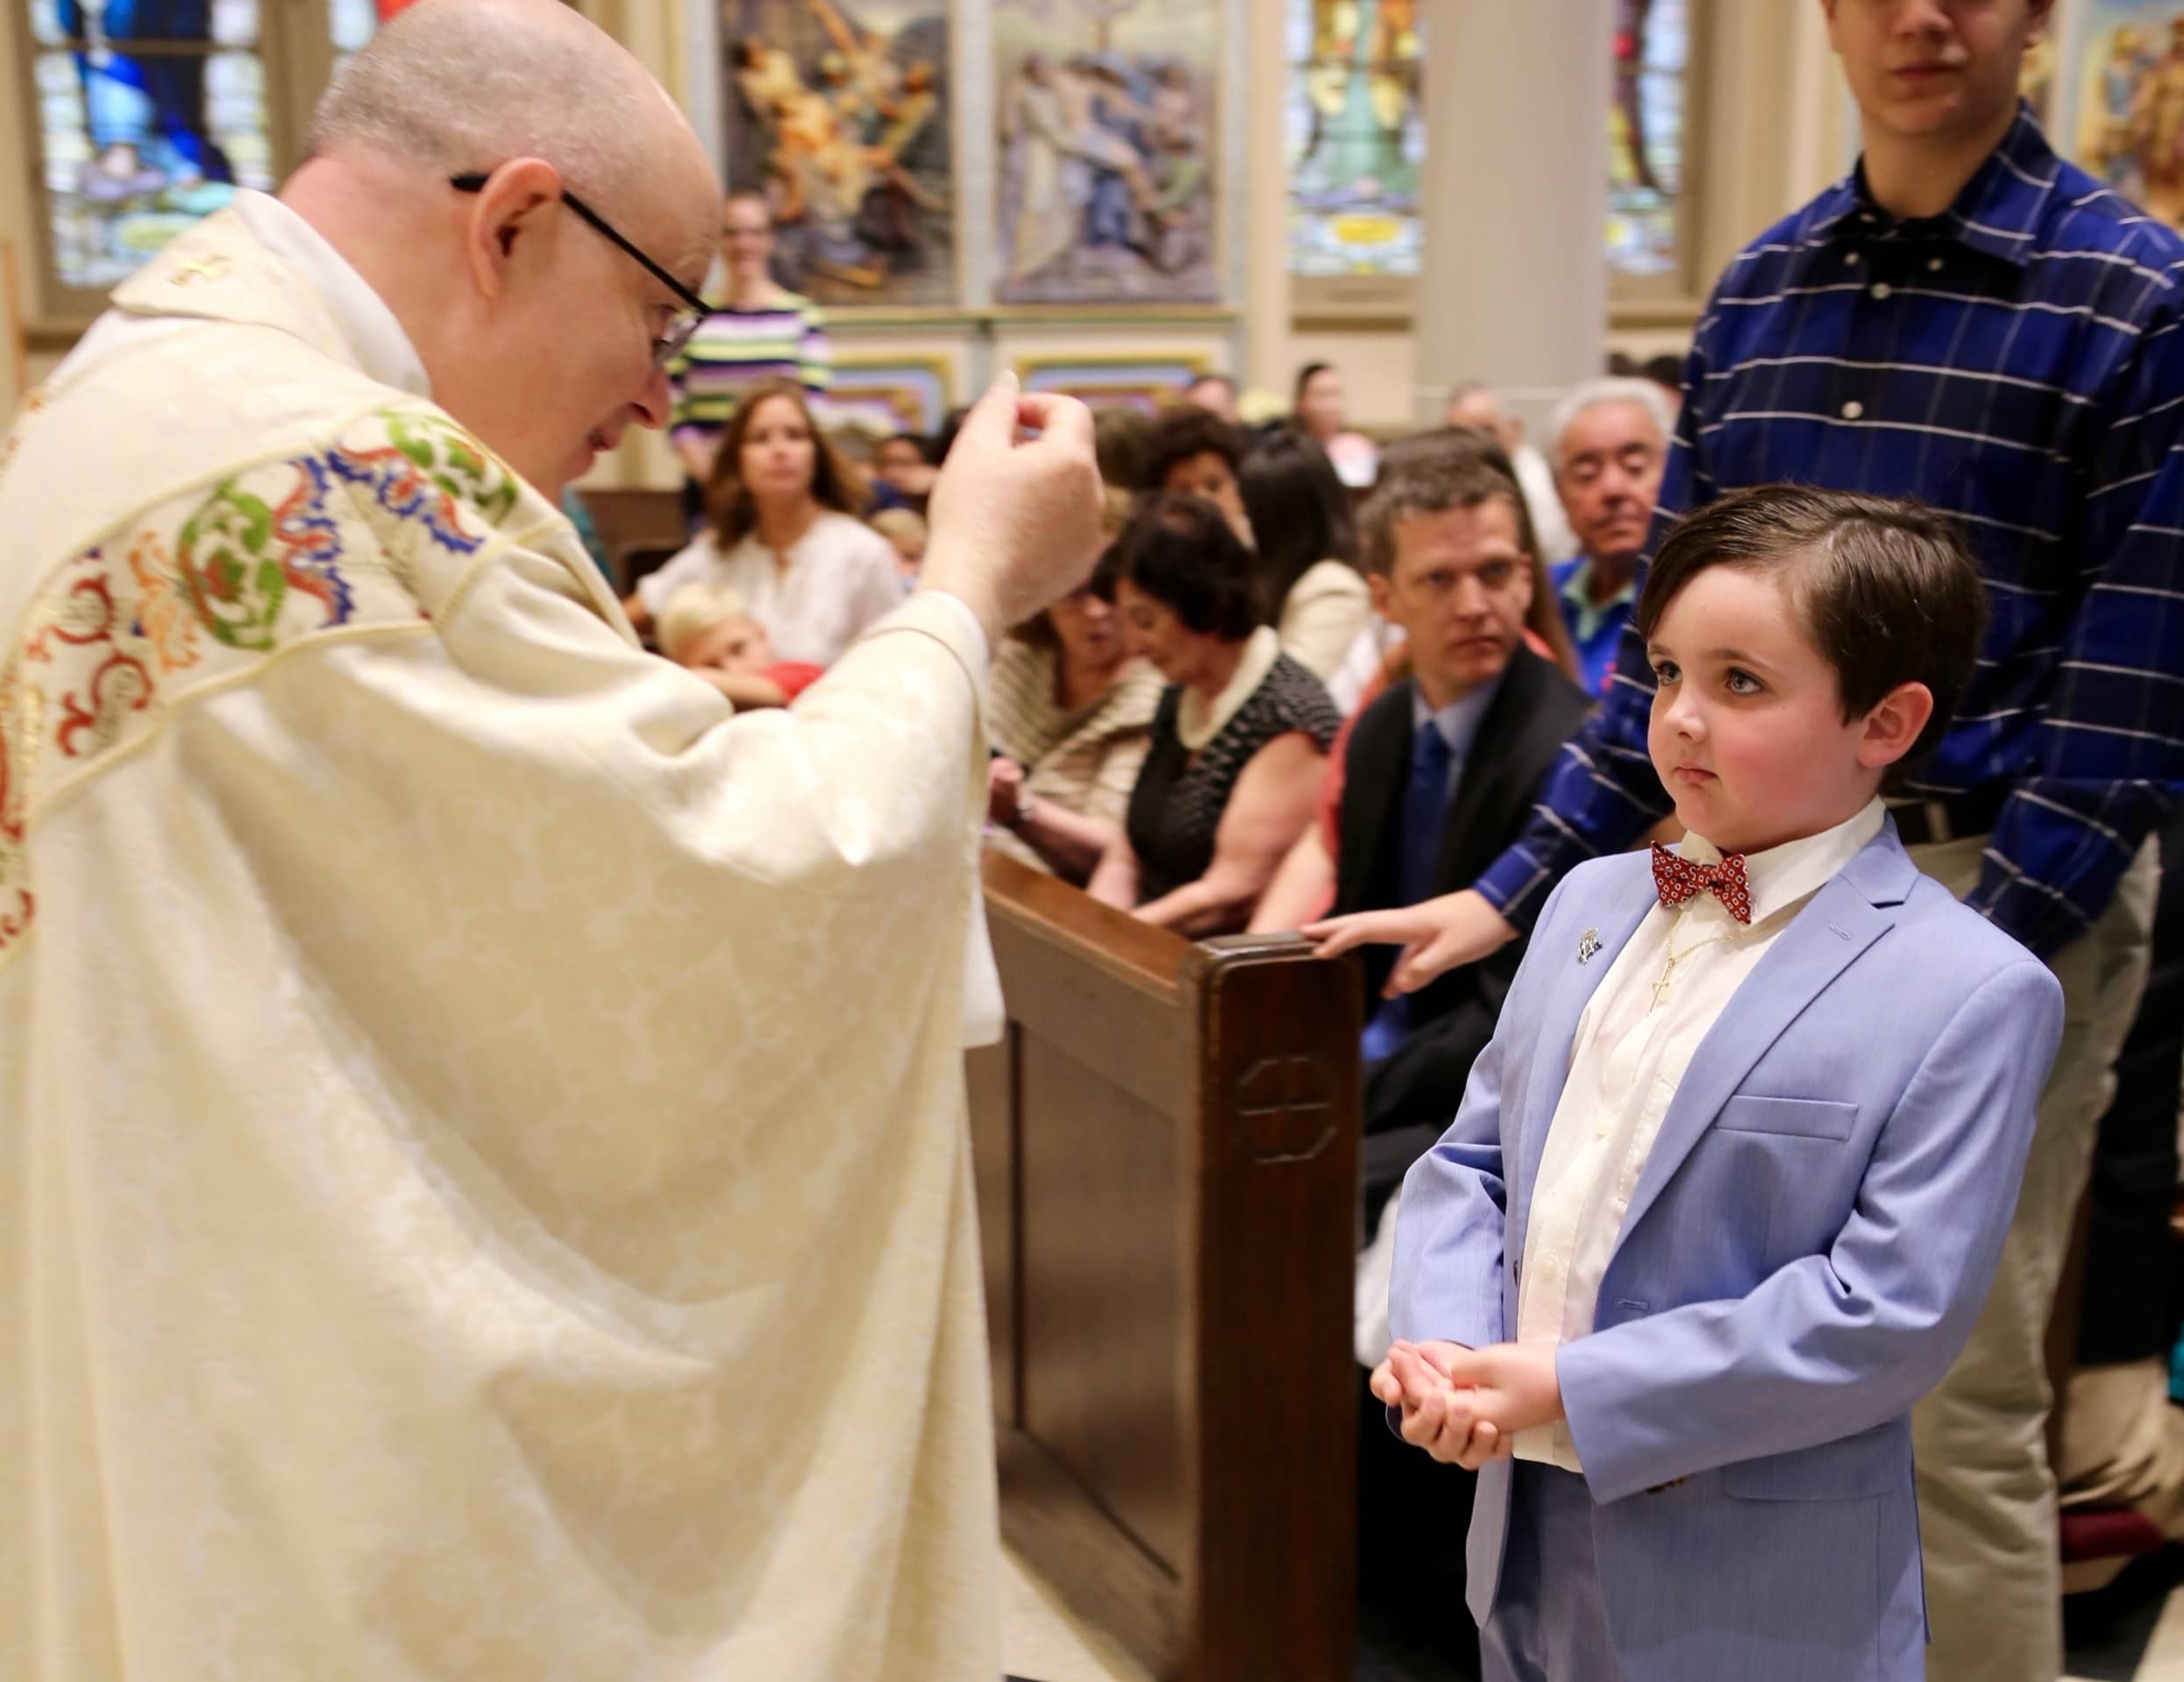 first-communion-boy-kid-suit-eucharist-st-francis-de-sales-church-new-york-city.jpg